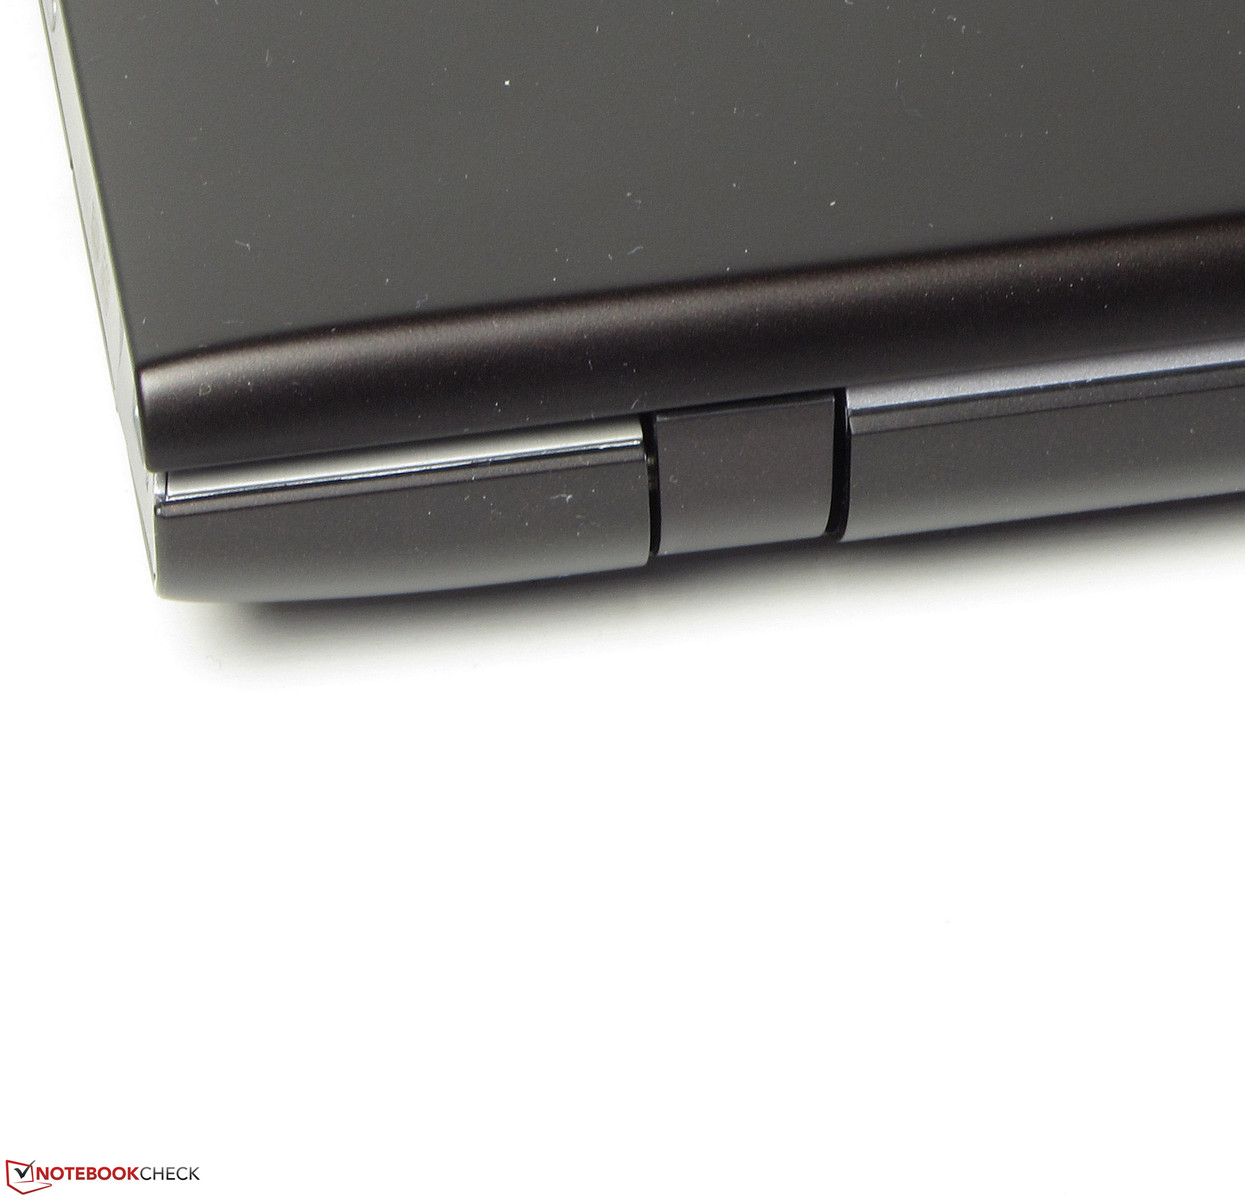 Review Lenovo IdeaPad Z510 Notebook - NotebookCheck.net Reviews